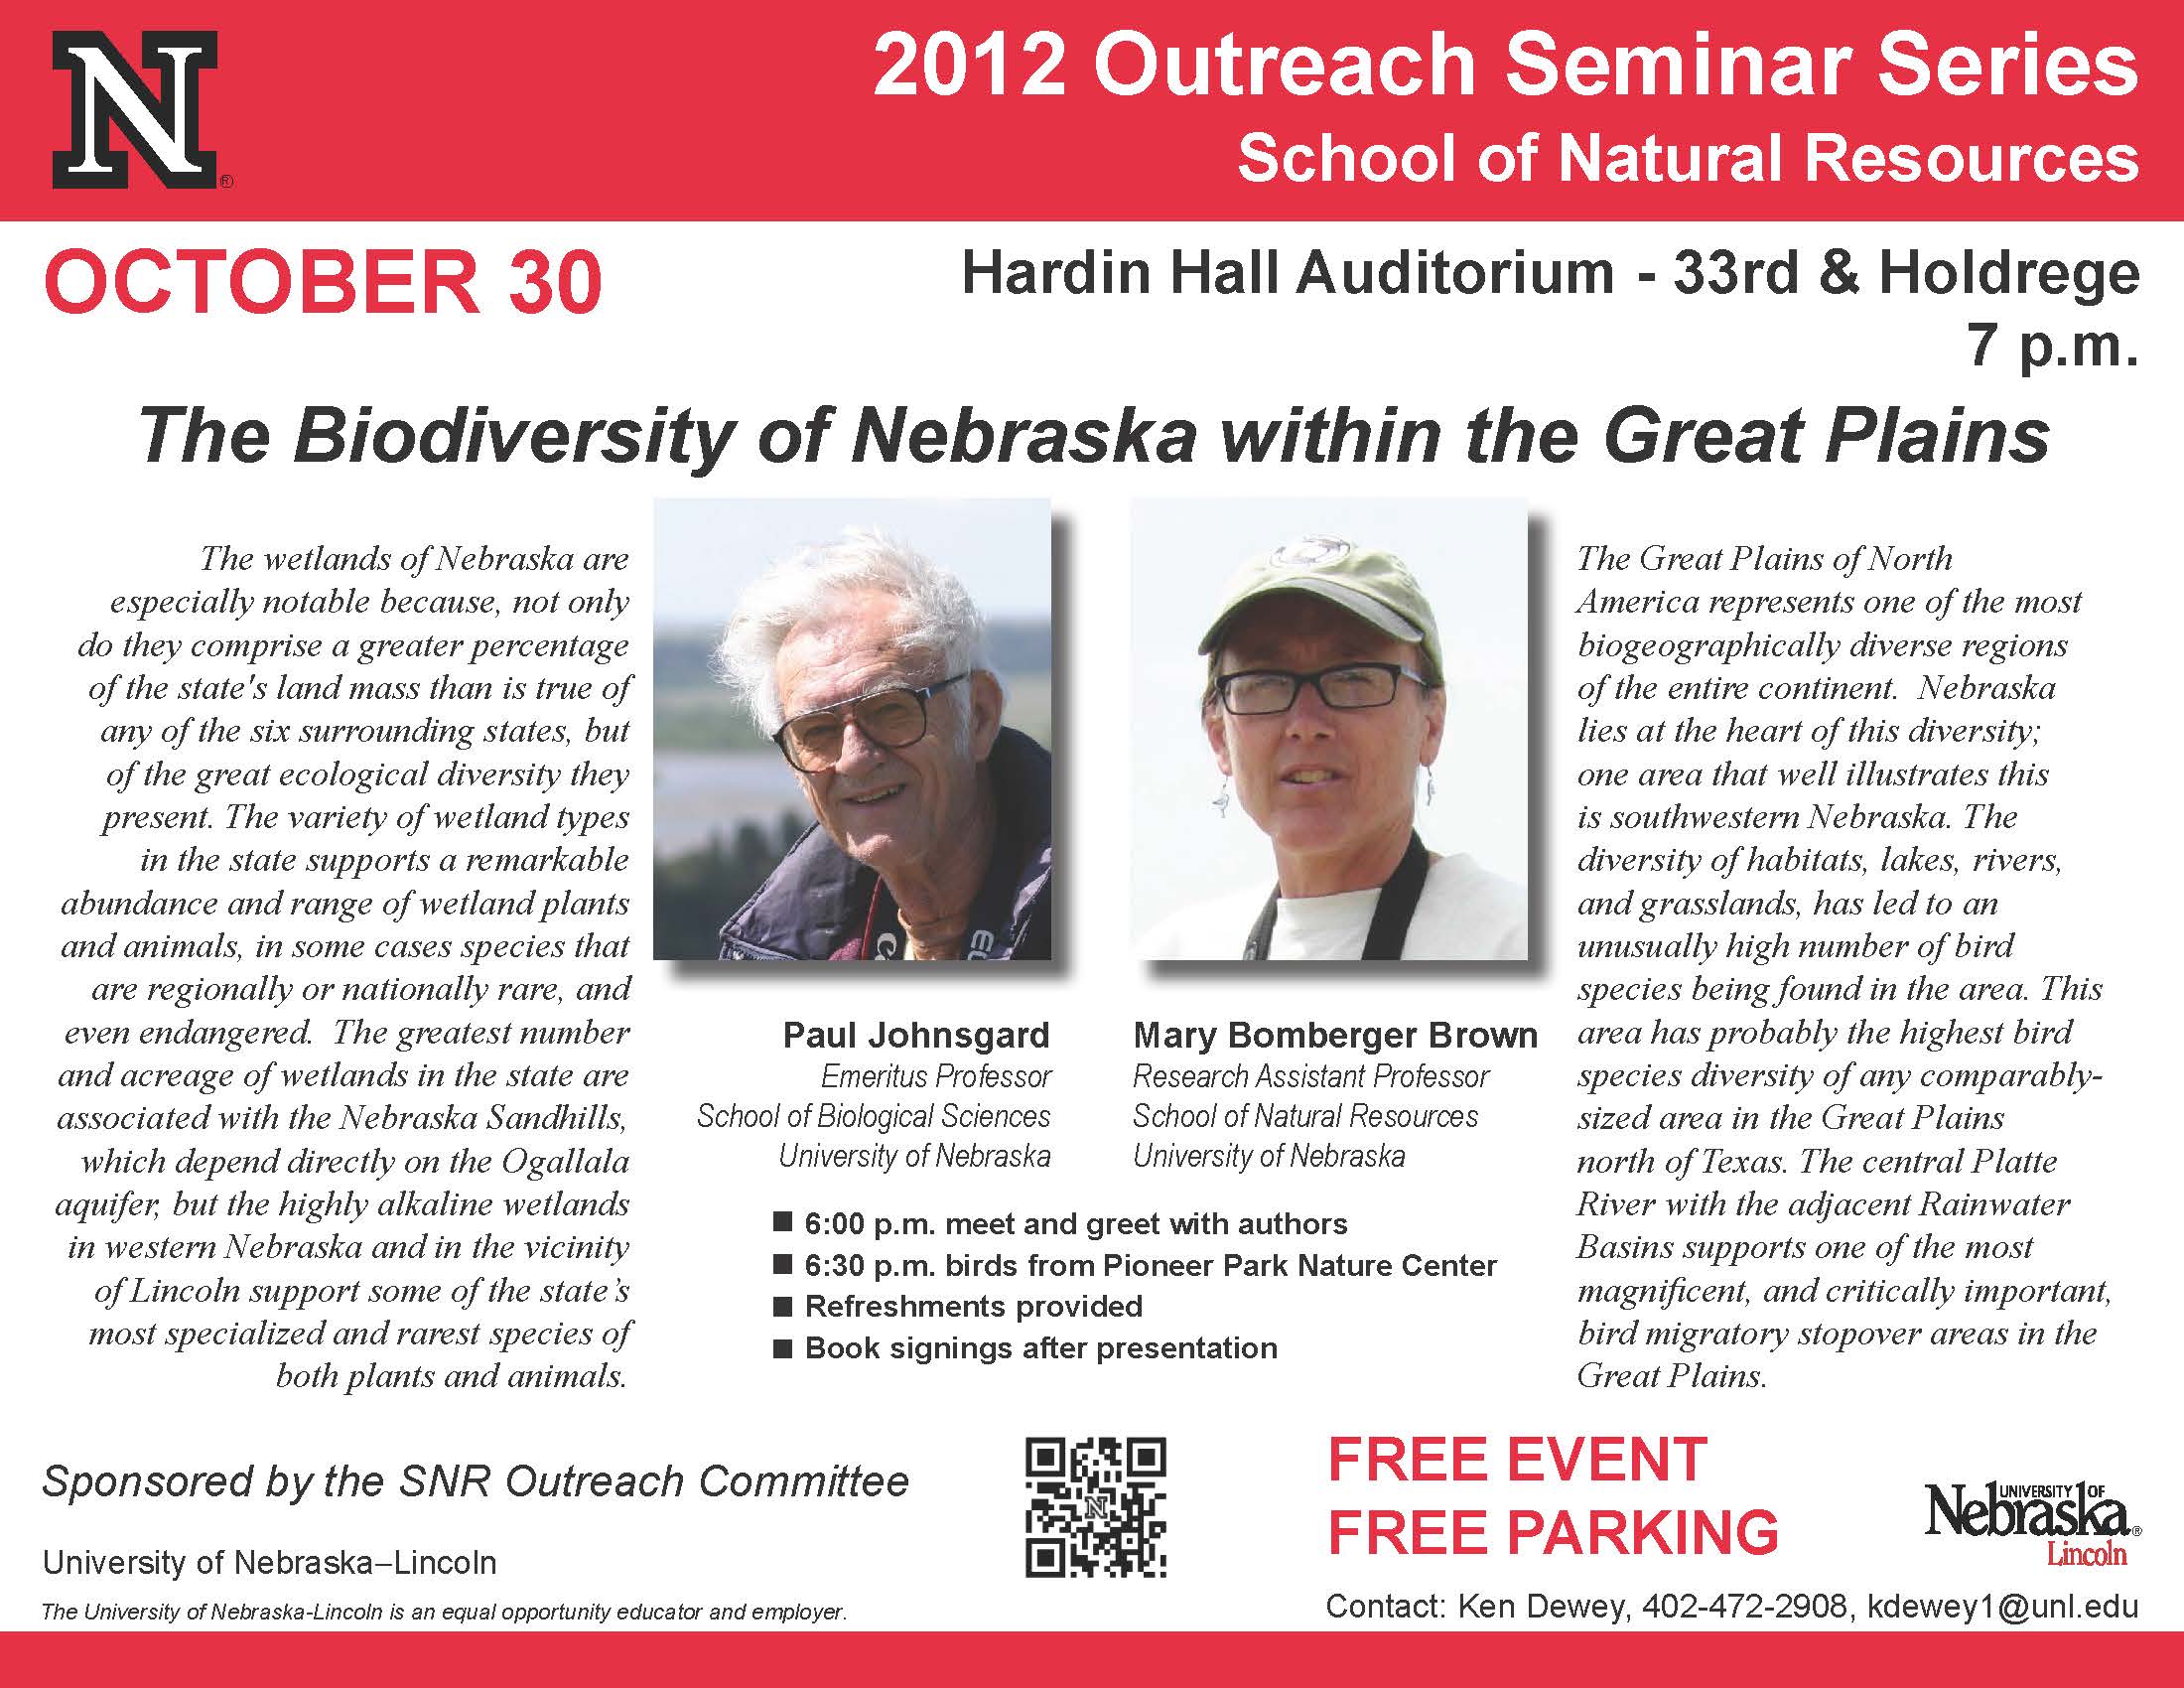 Outreach seminar: Oct. 30 at Hardin Hall